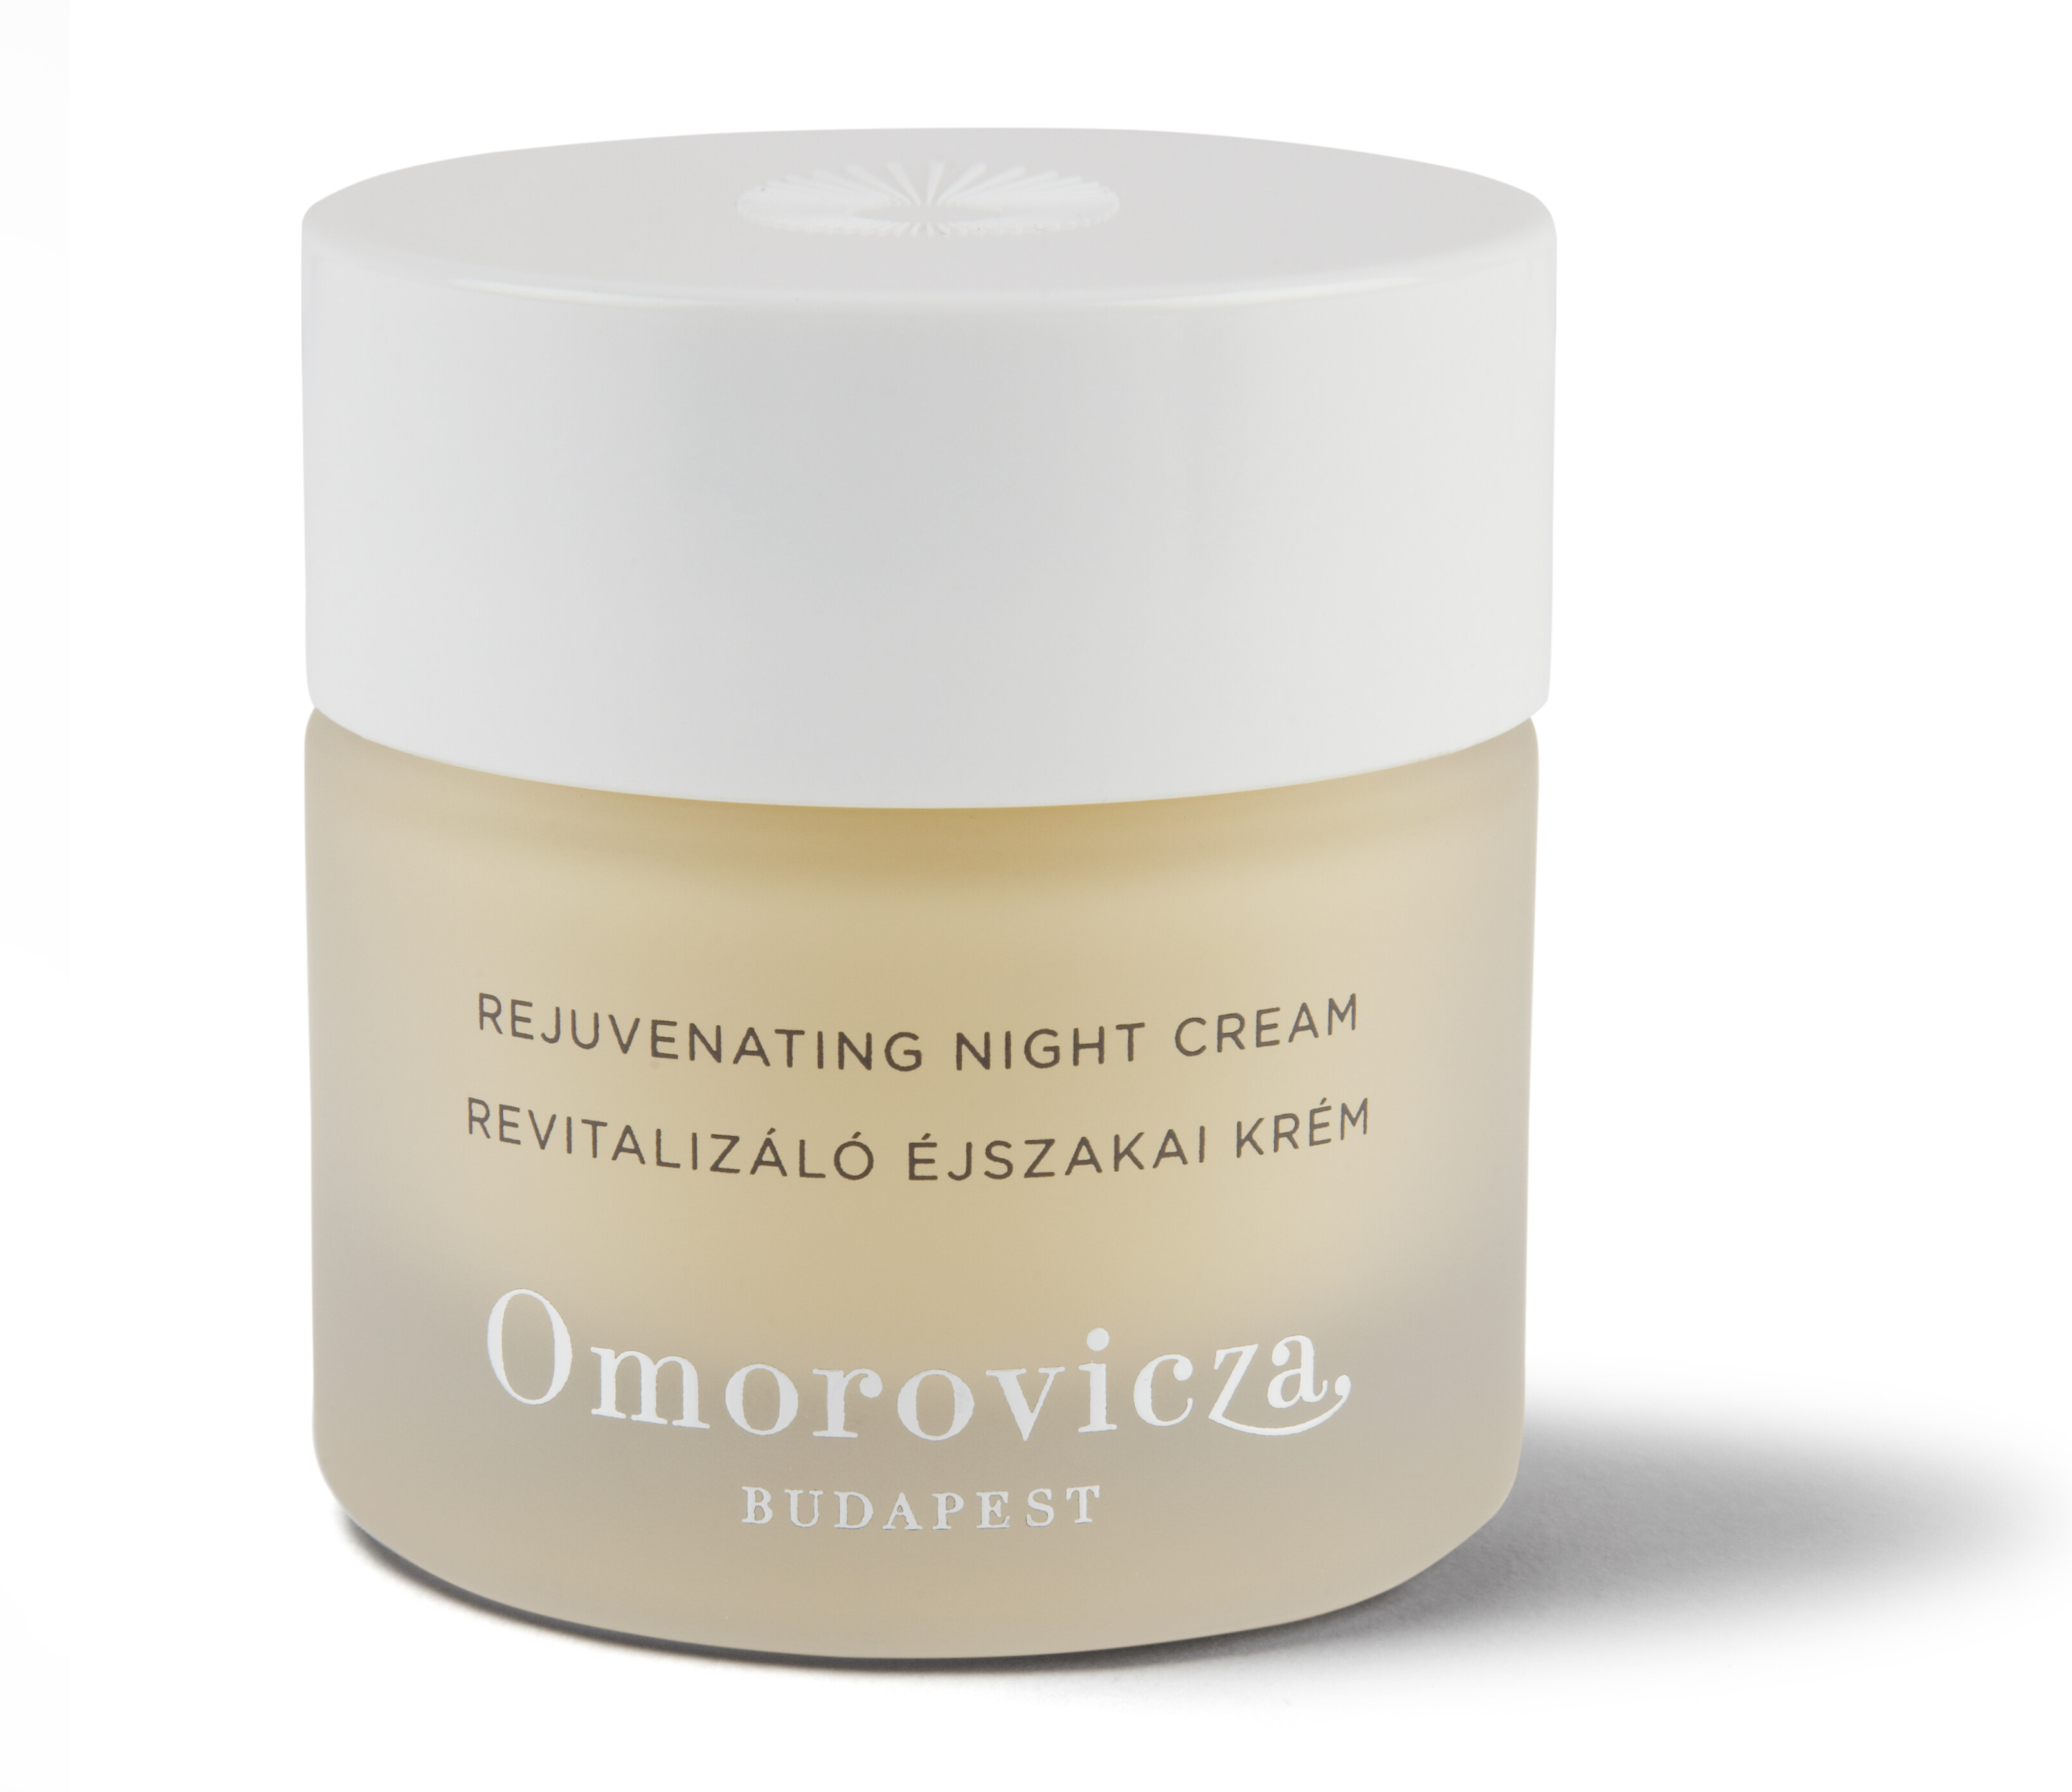 OmoroviczaRejuvenating Night Cream $1,400/50ml